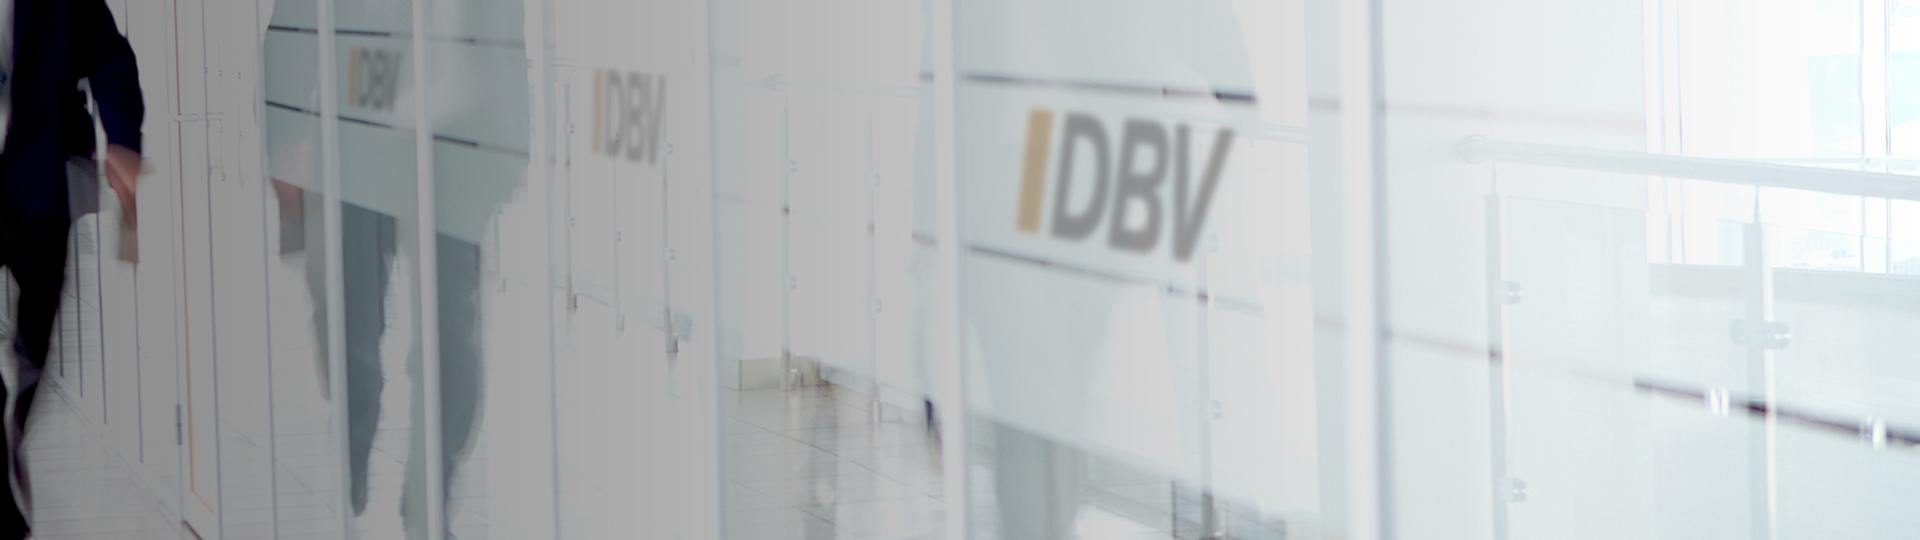 Private Krankenversicherung | DBV Bamberg Kremer OHG 